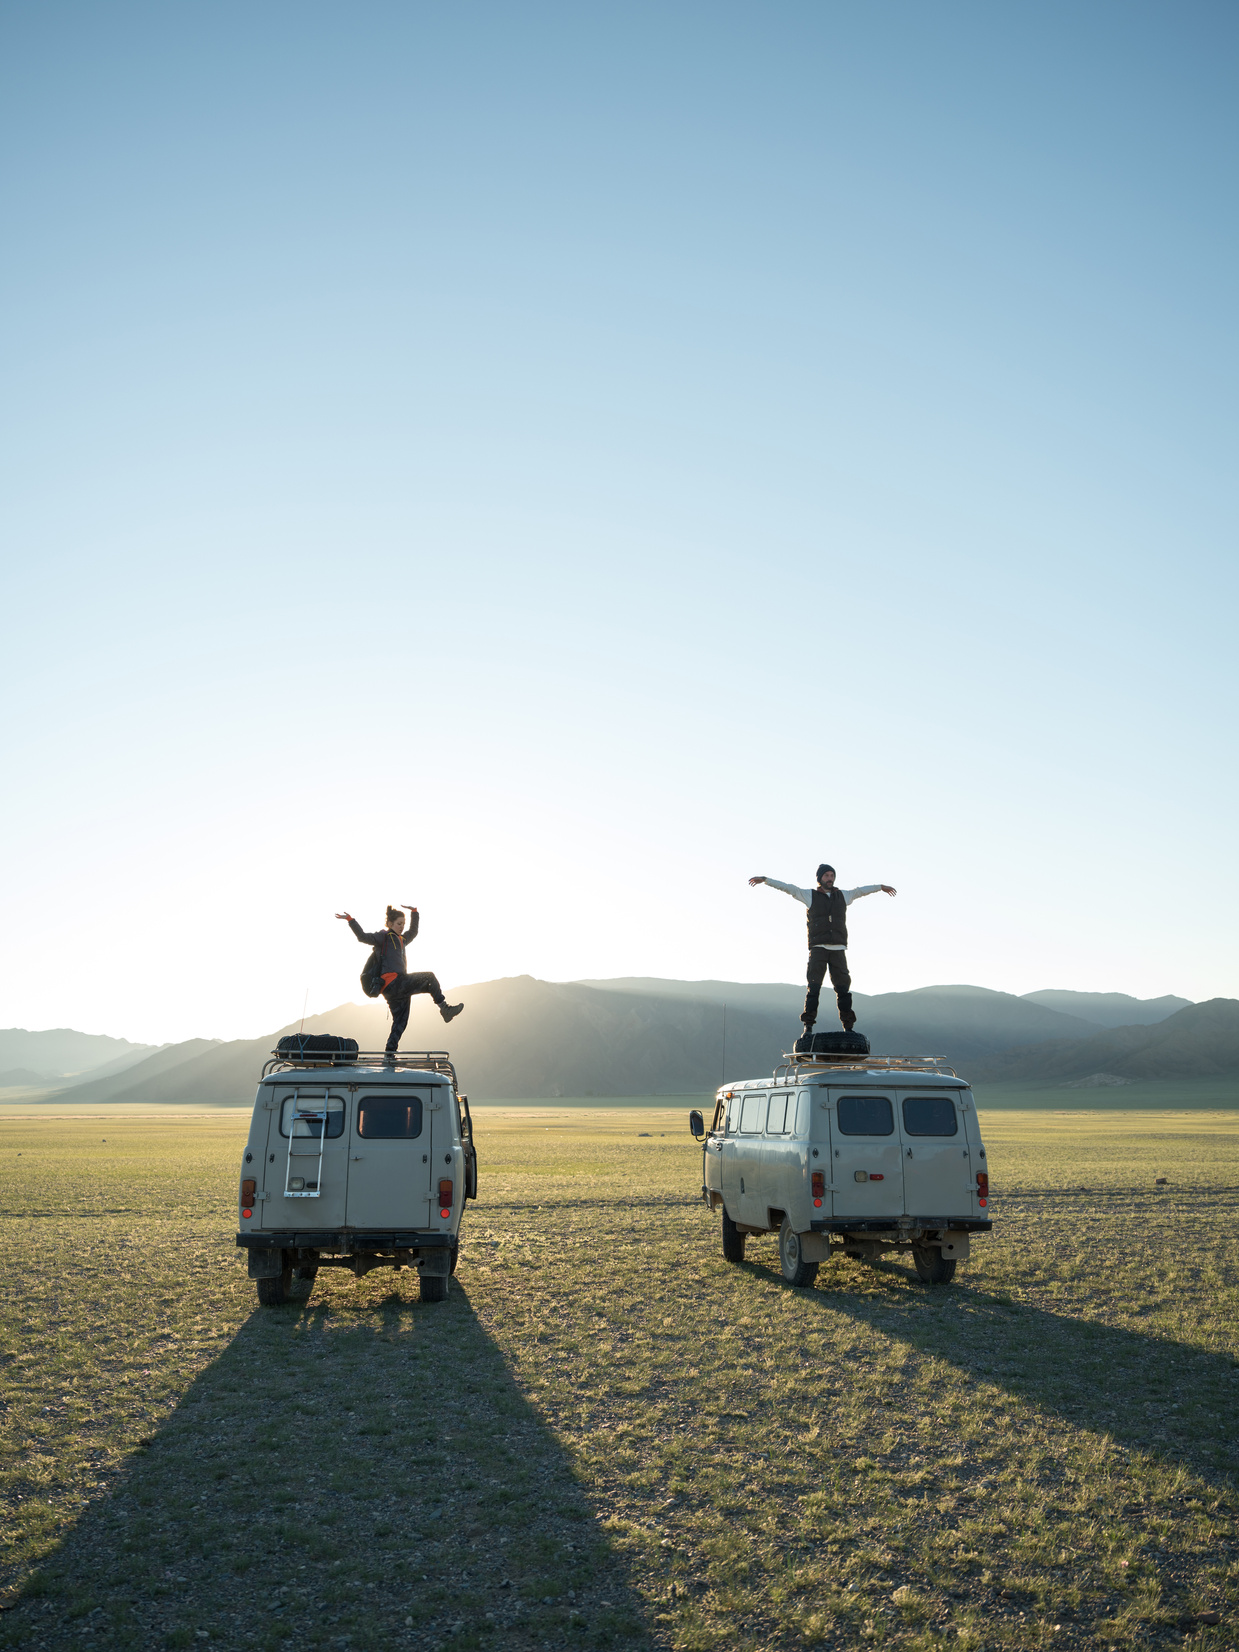 Travelers standing on vans in remote valley